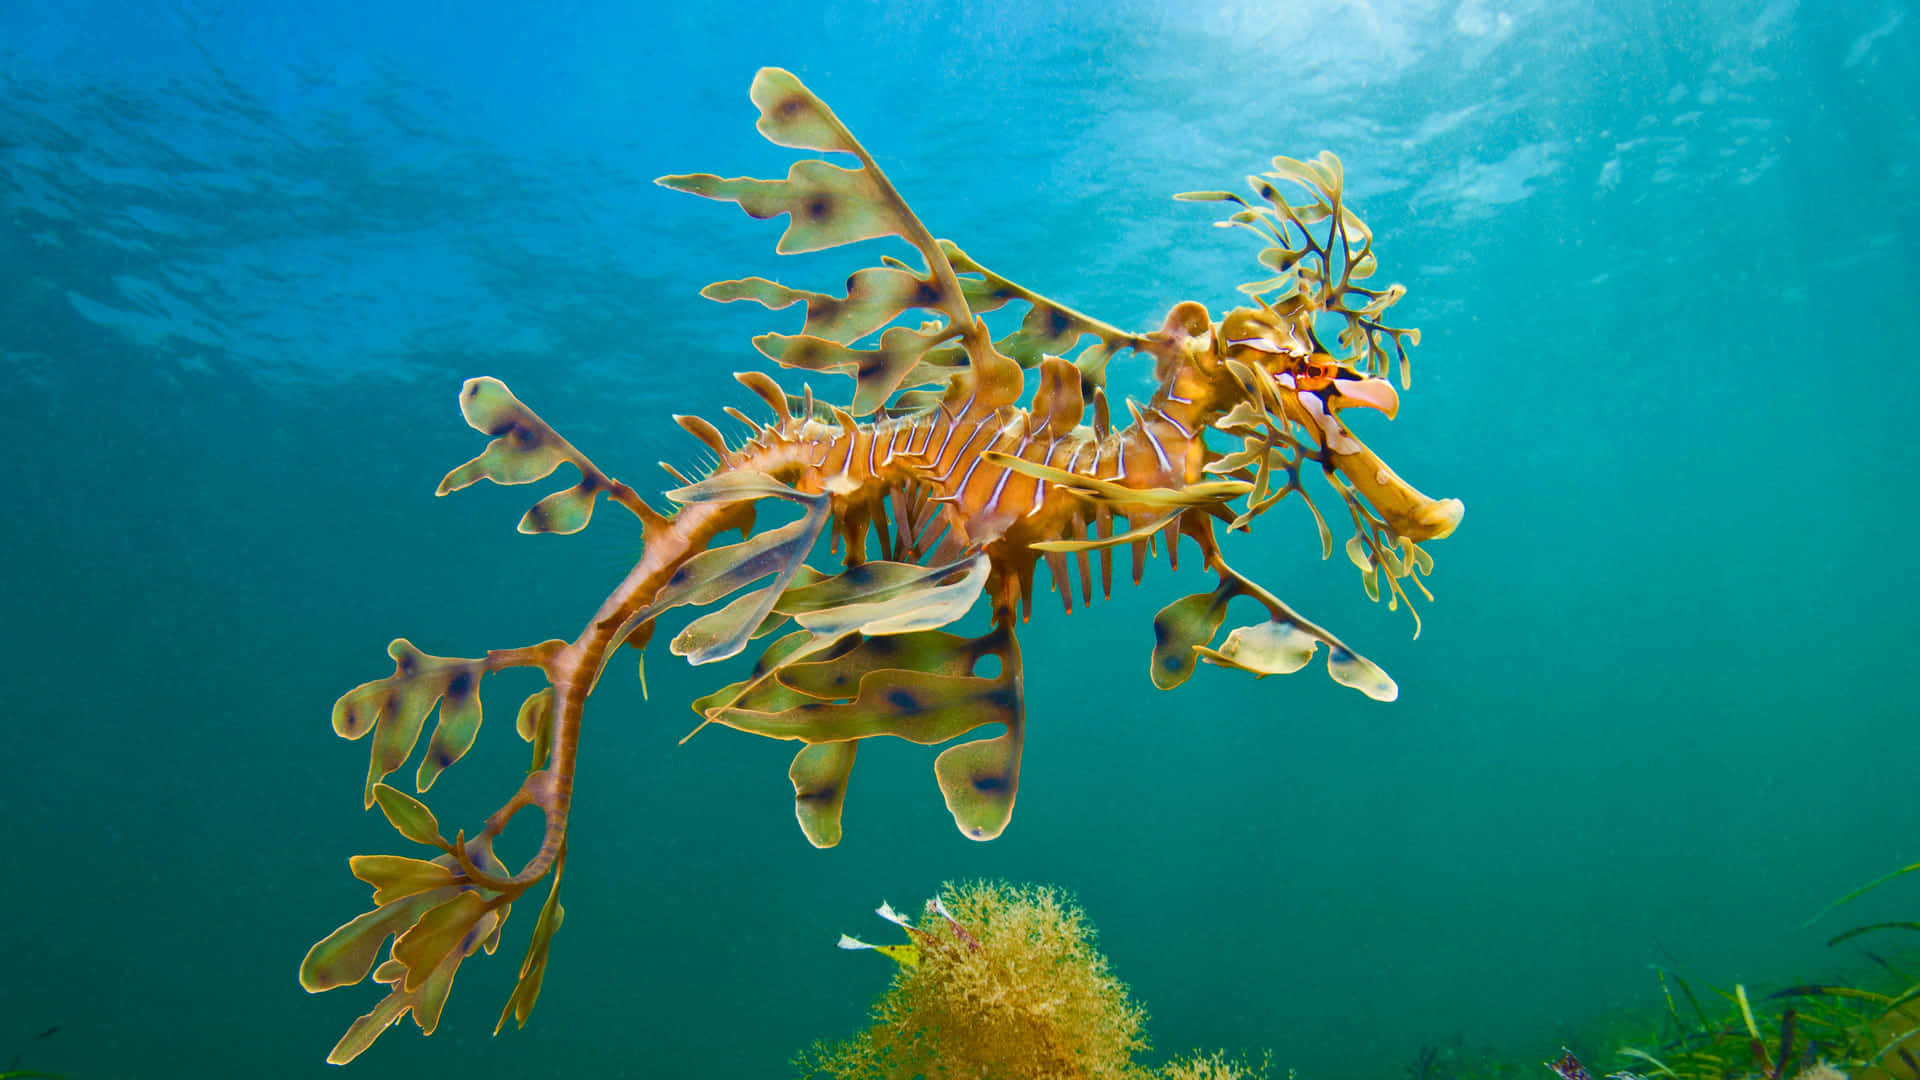 Leafy Sea Dragon Underwater Camouflage Wallpaper